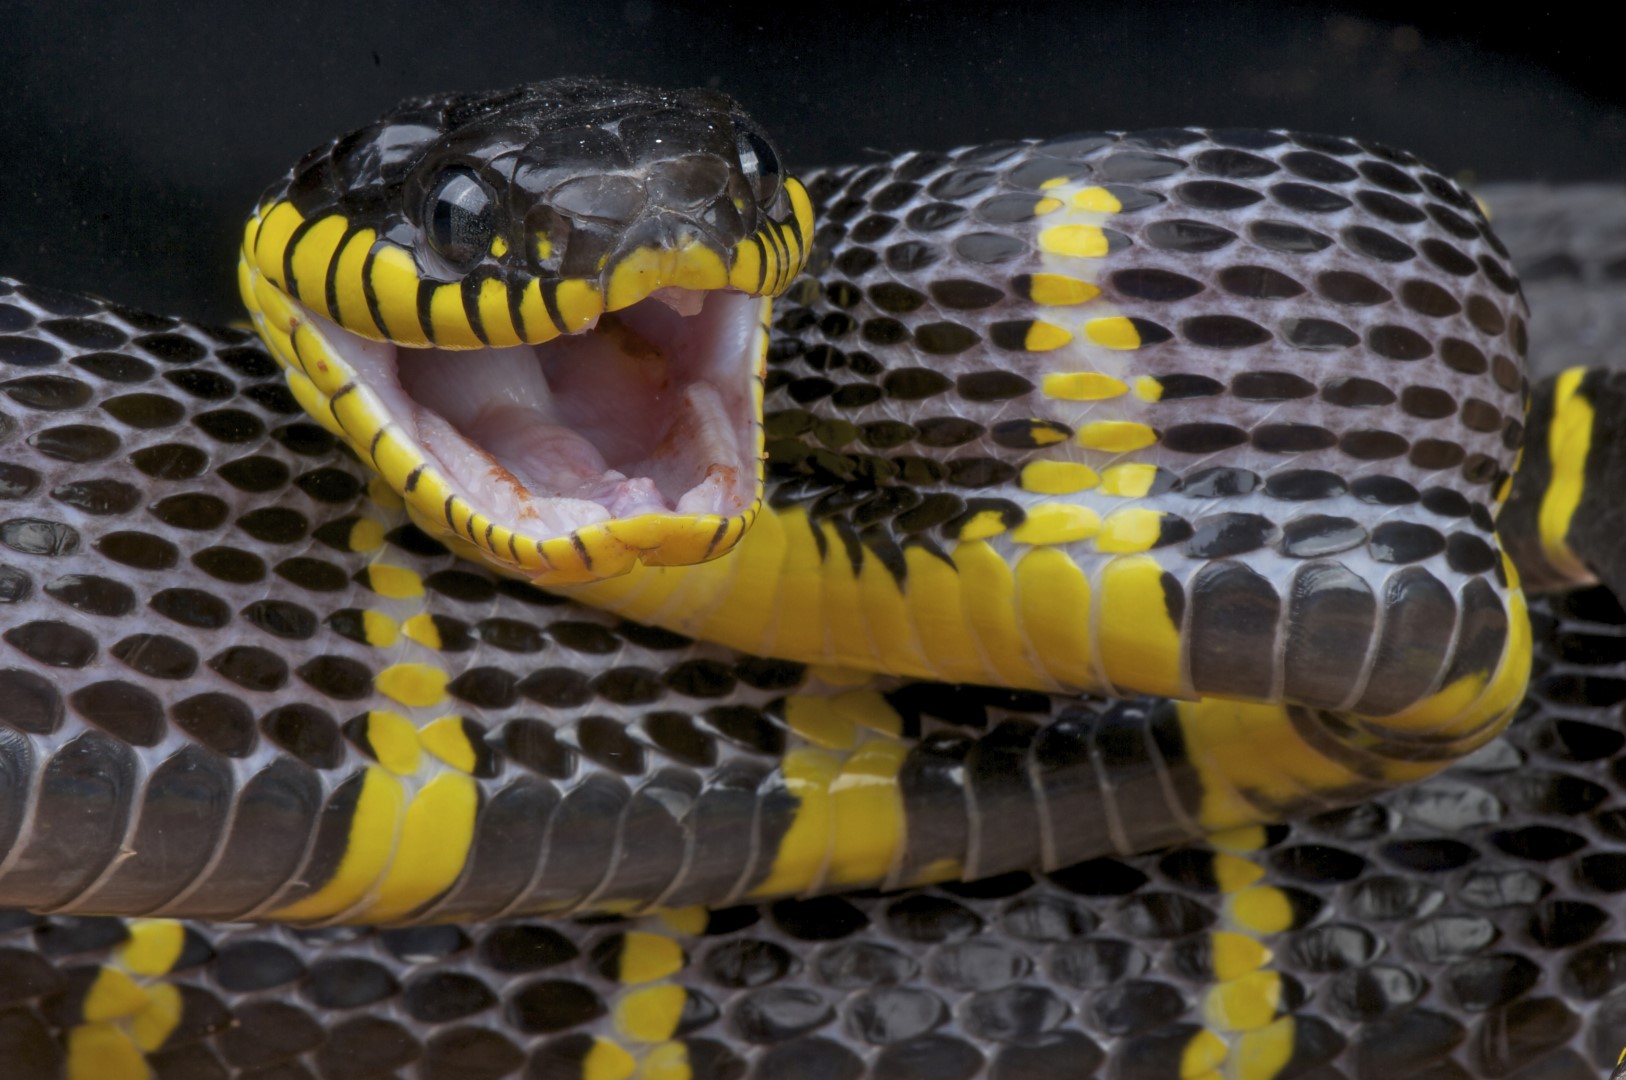 venomous snake (Large)